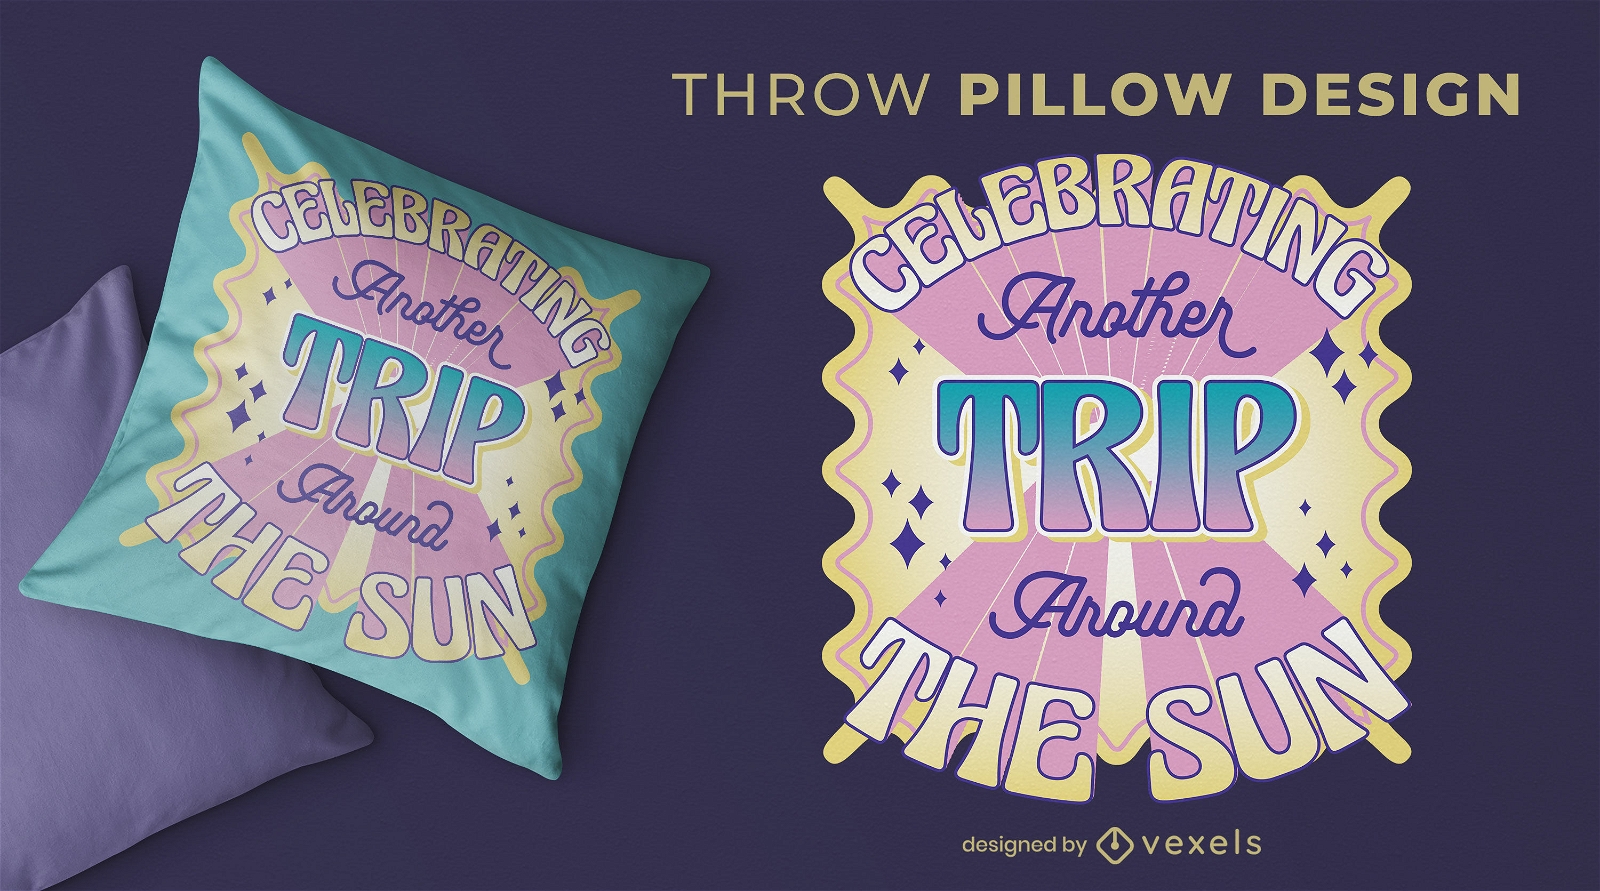 Retro birthday quote throw pillow design